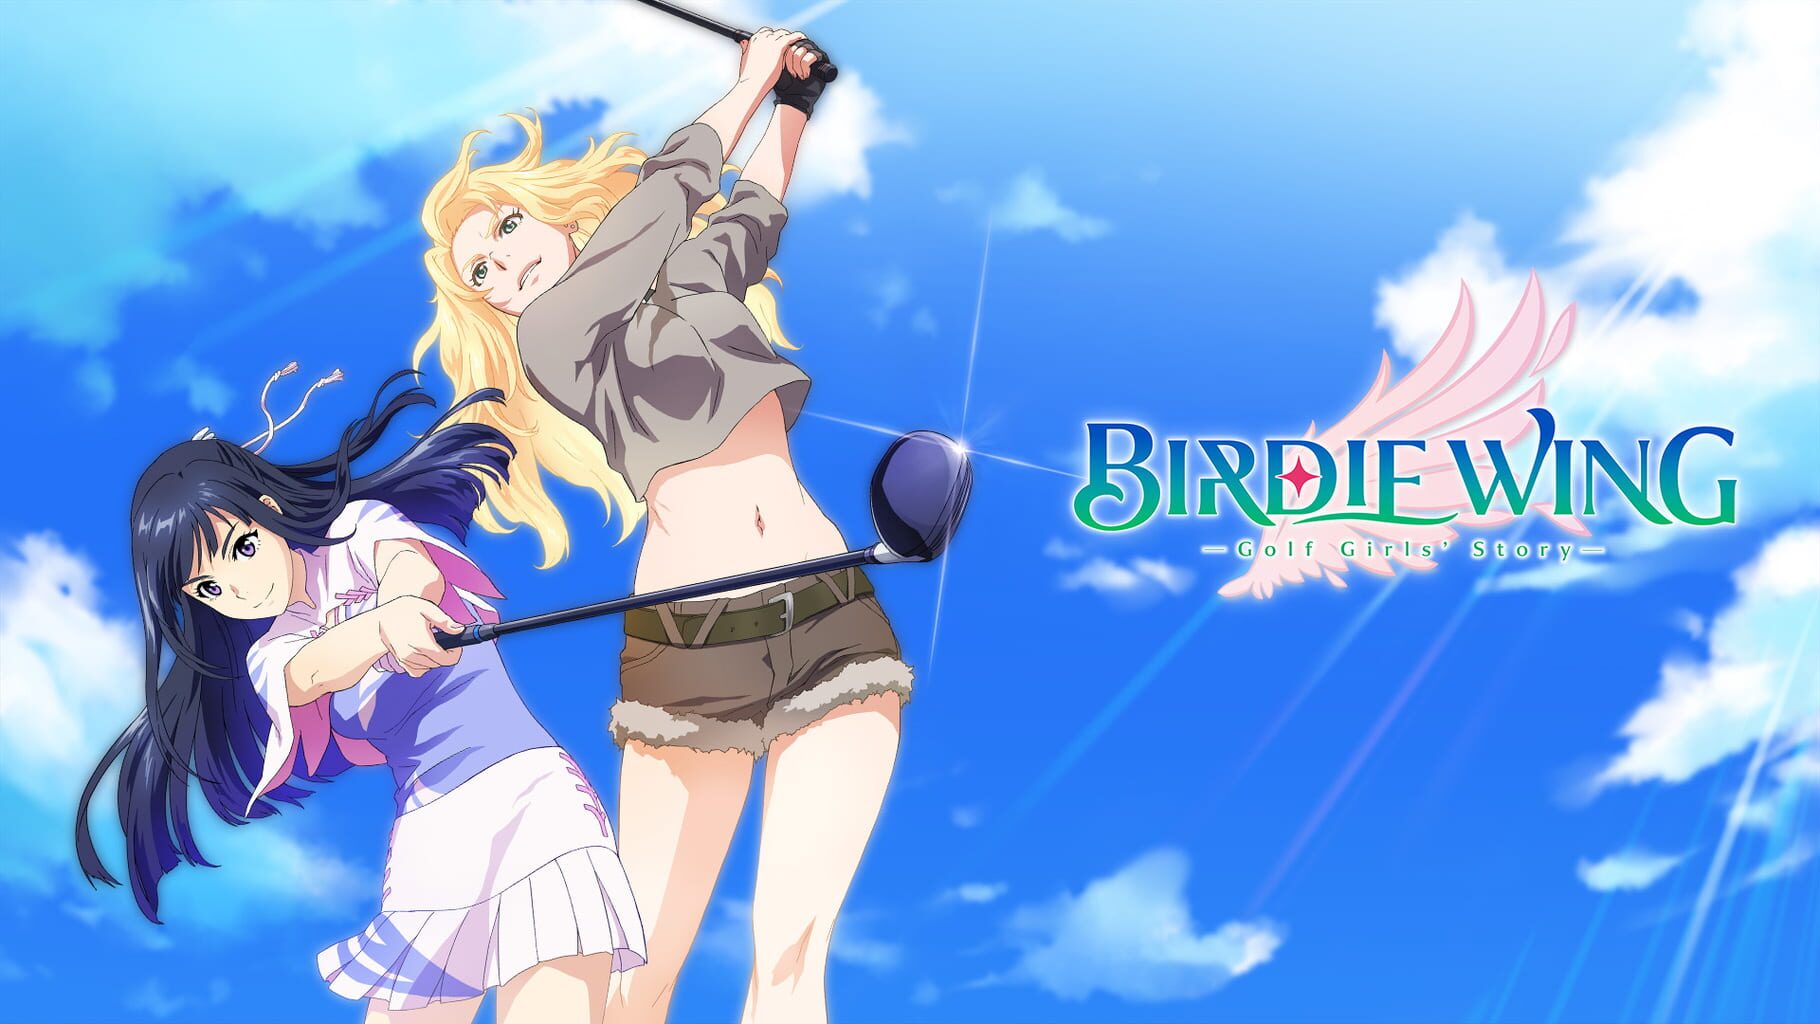 Arte - Birdie Wing: Golf Girls' Story